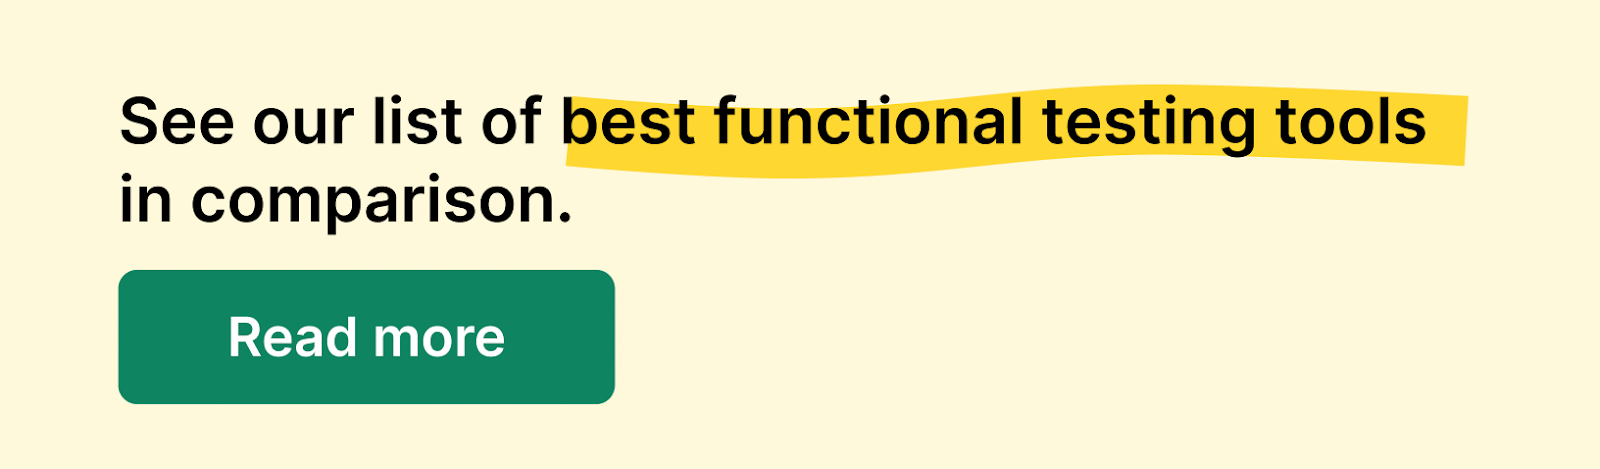 Best functional testing tools in comparison | Katalon Platform